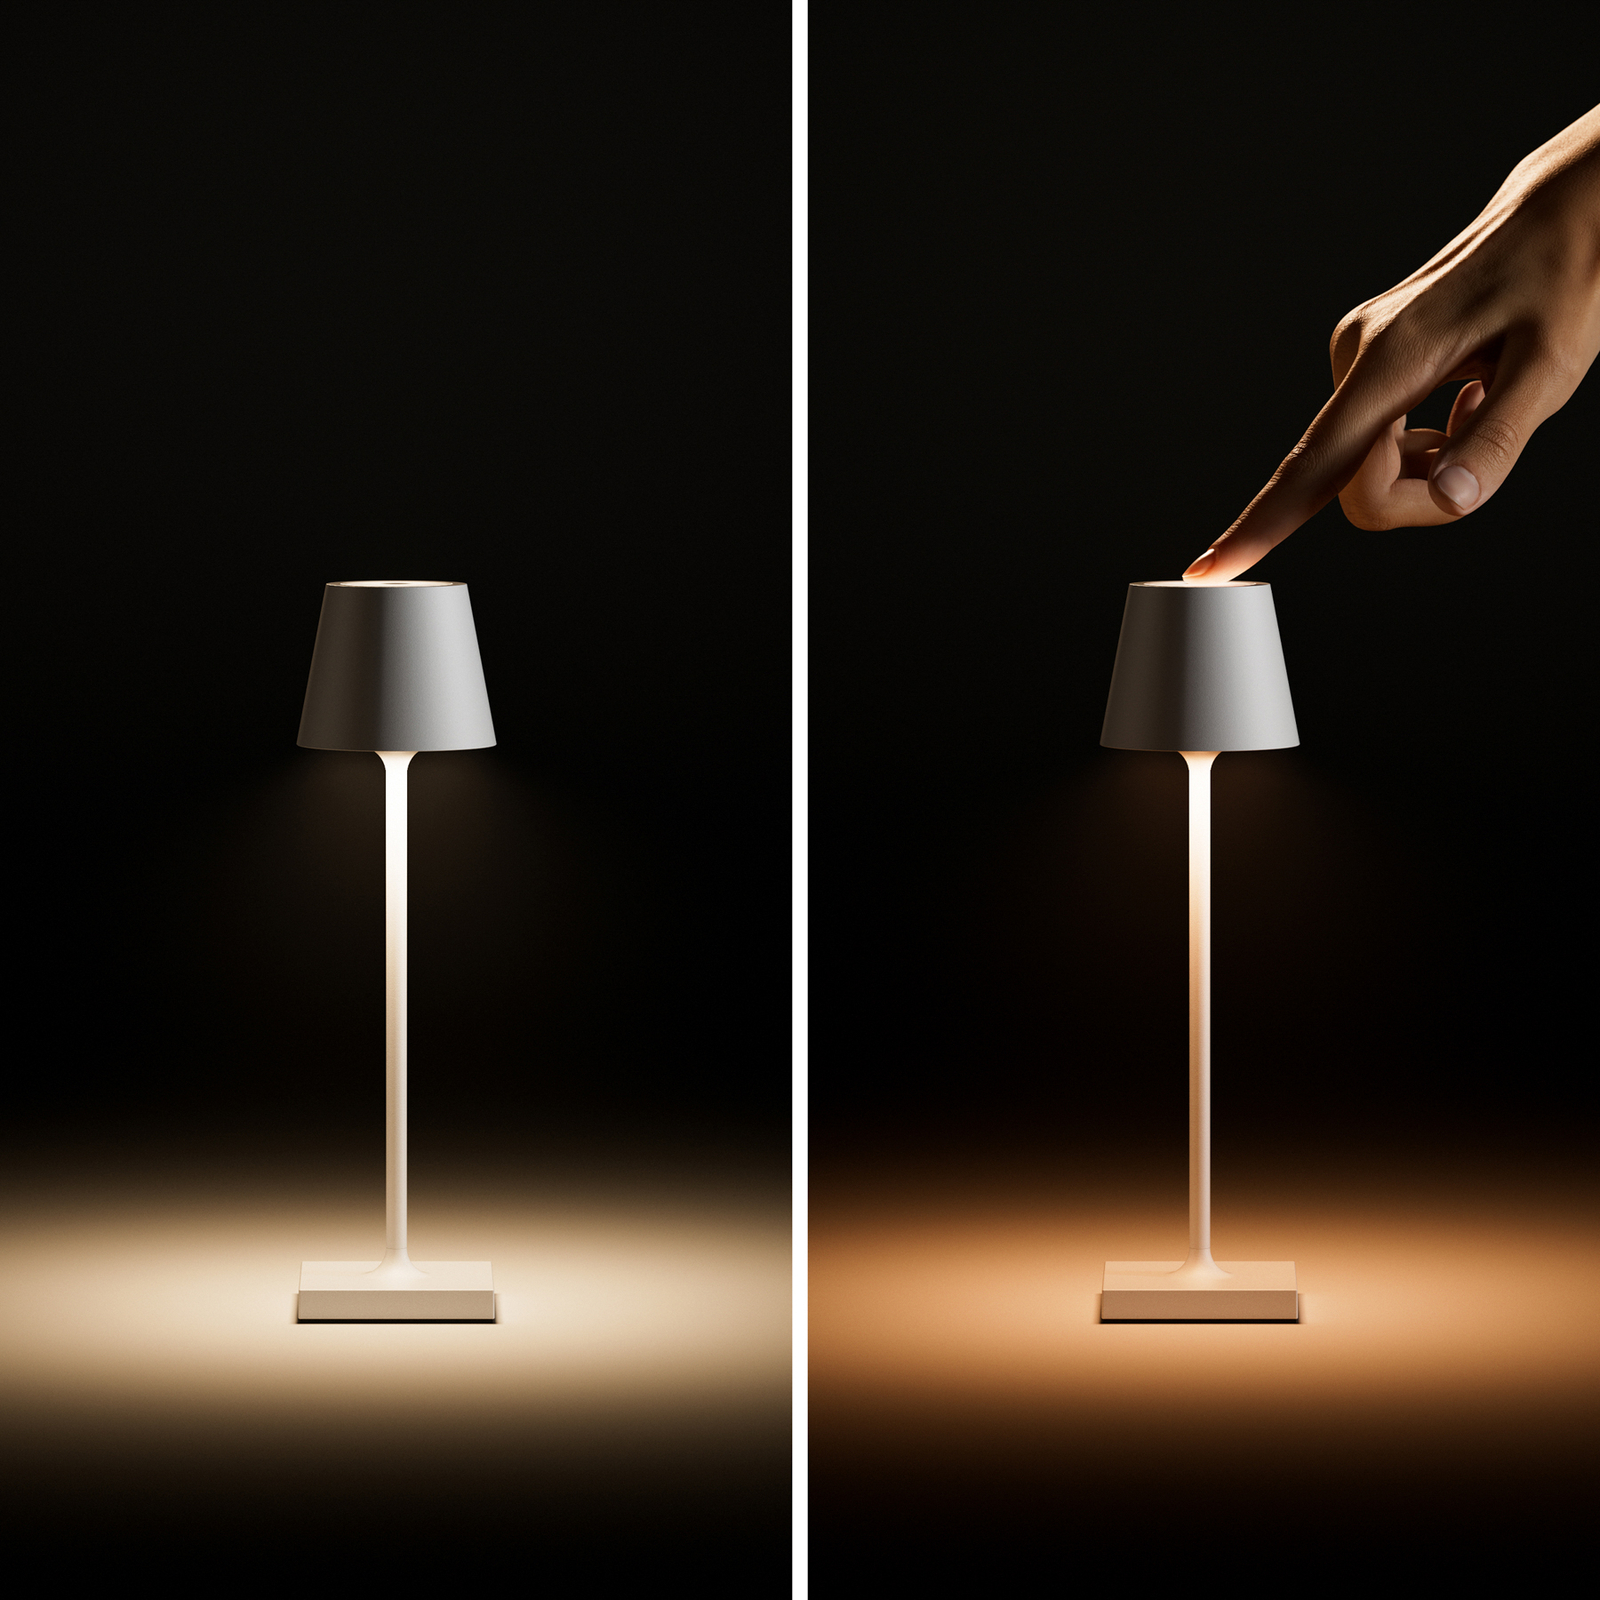 Lampe de table LED rechargeable Nuindie pocket, vert sauge